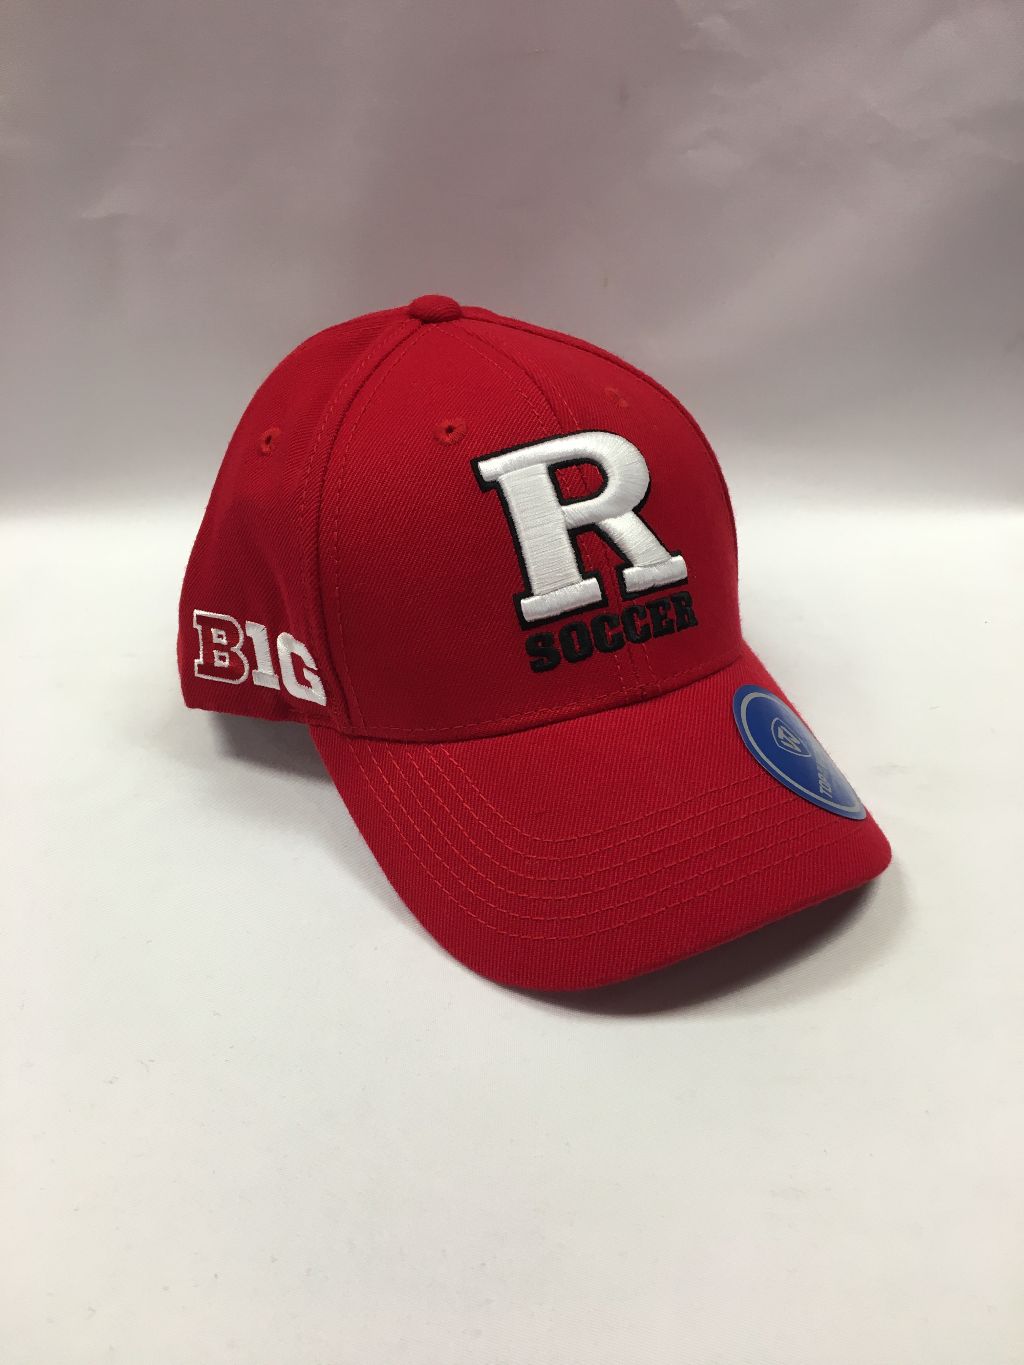 Rutgers double pompom beanie by Zoozatz - Scarlet Fever Rutgers Gear